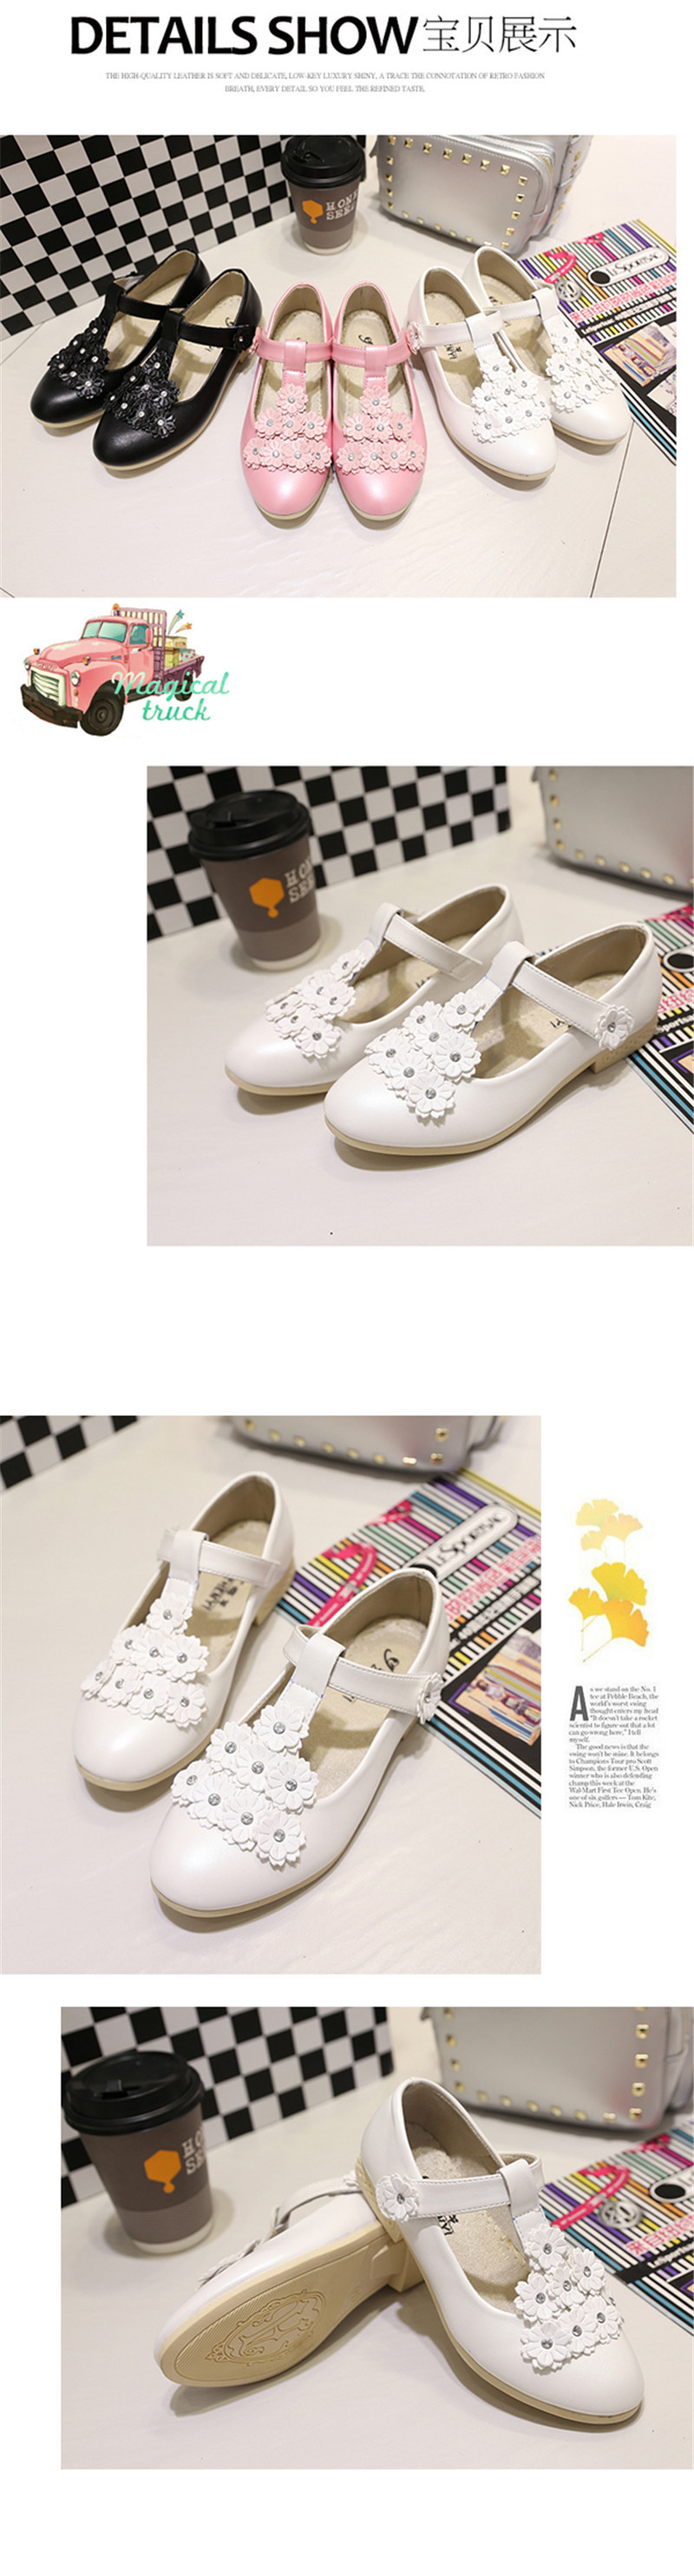 Girl Mini Melissa Rain Shoes For Baby Girl Sandals Shoes Flowers Patent Leather Sandalia Infantil Fashion Girl Shoes (1)